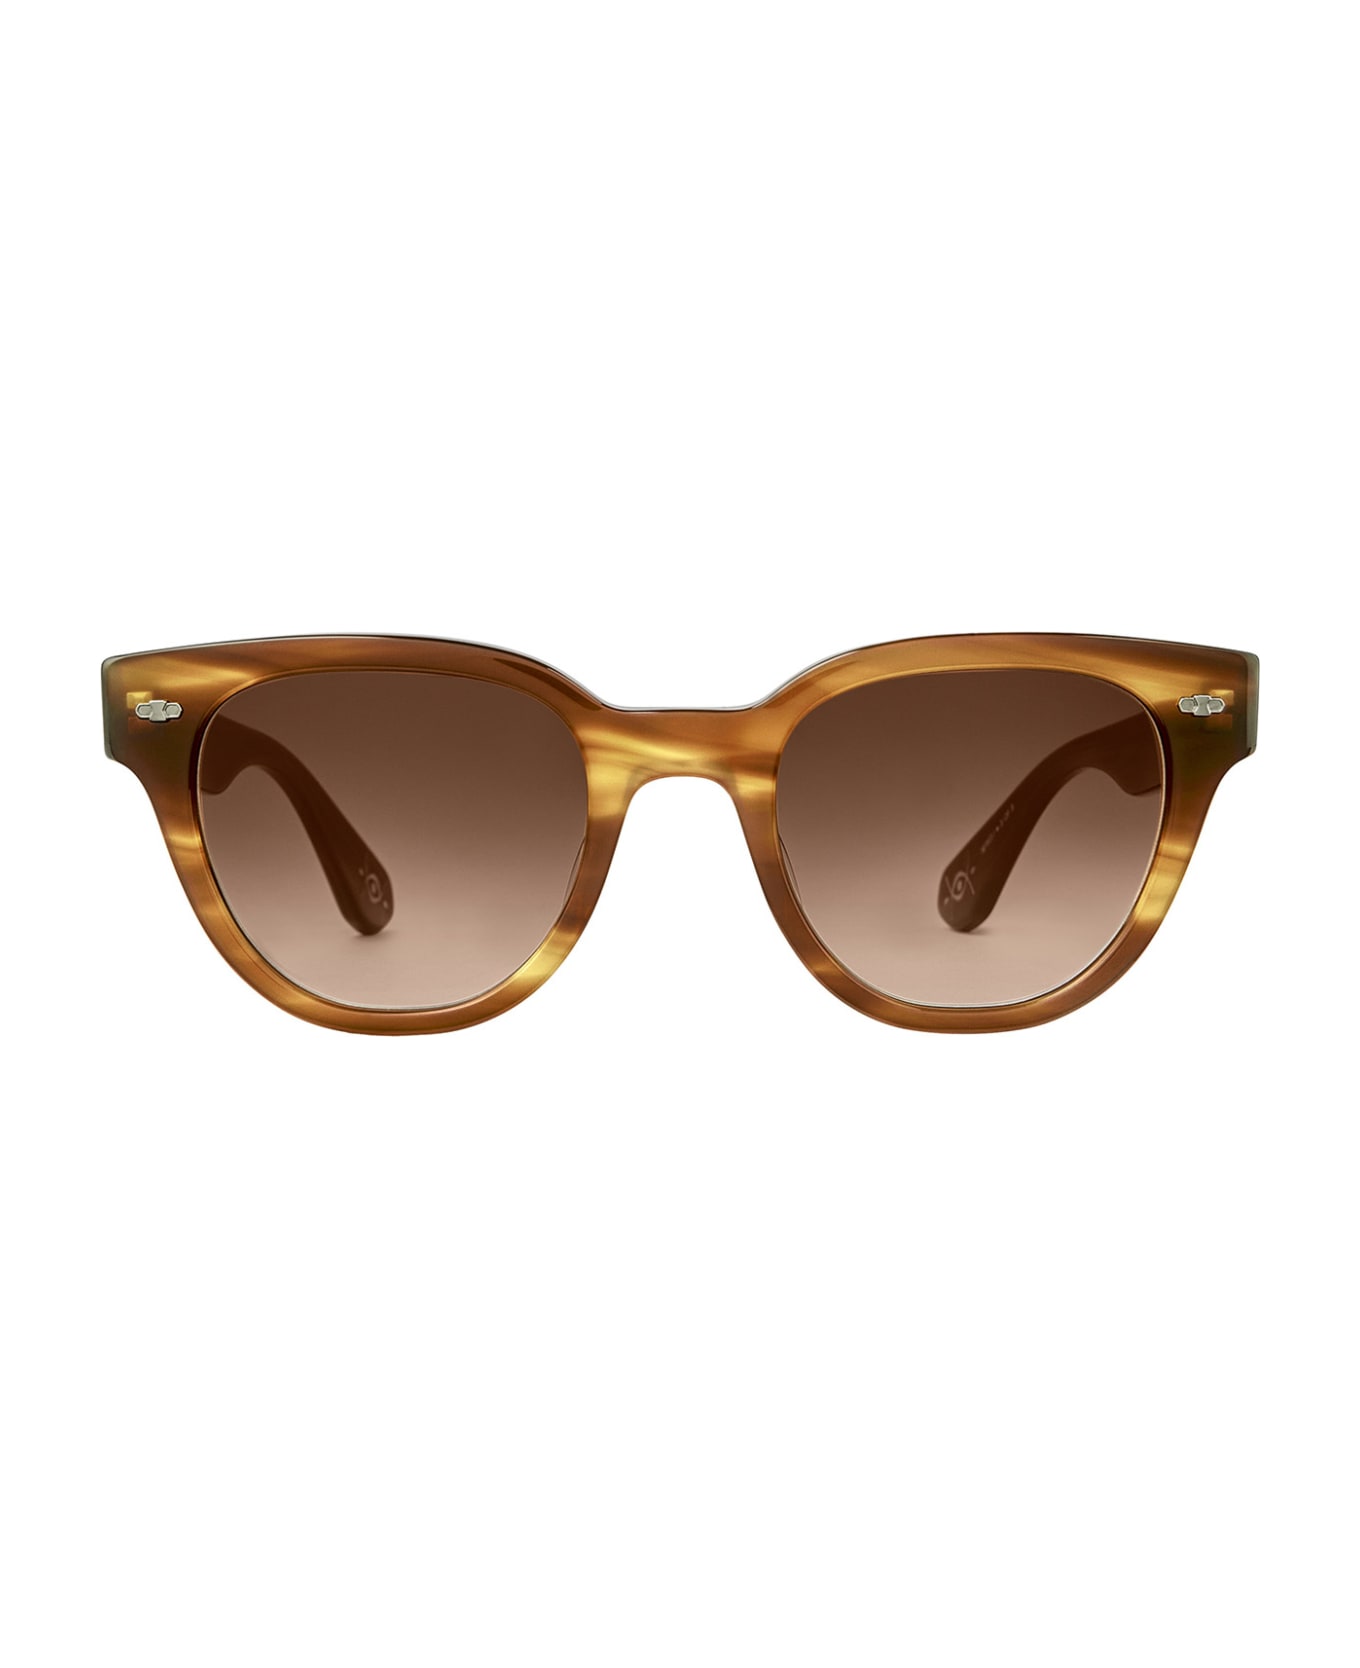 Mr. Leight Jane S Beachwood-white Gold/saturn Gradient Sunglasses - Beachwood-White Gold/Saturn Gradient サングラス